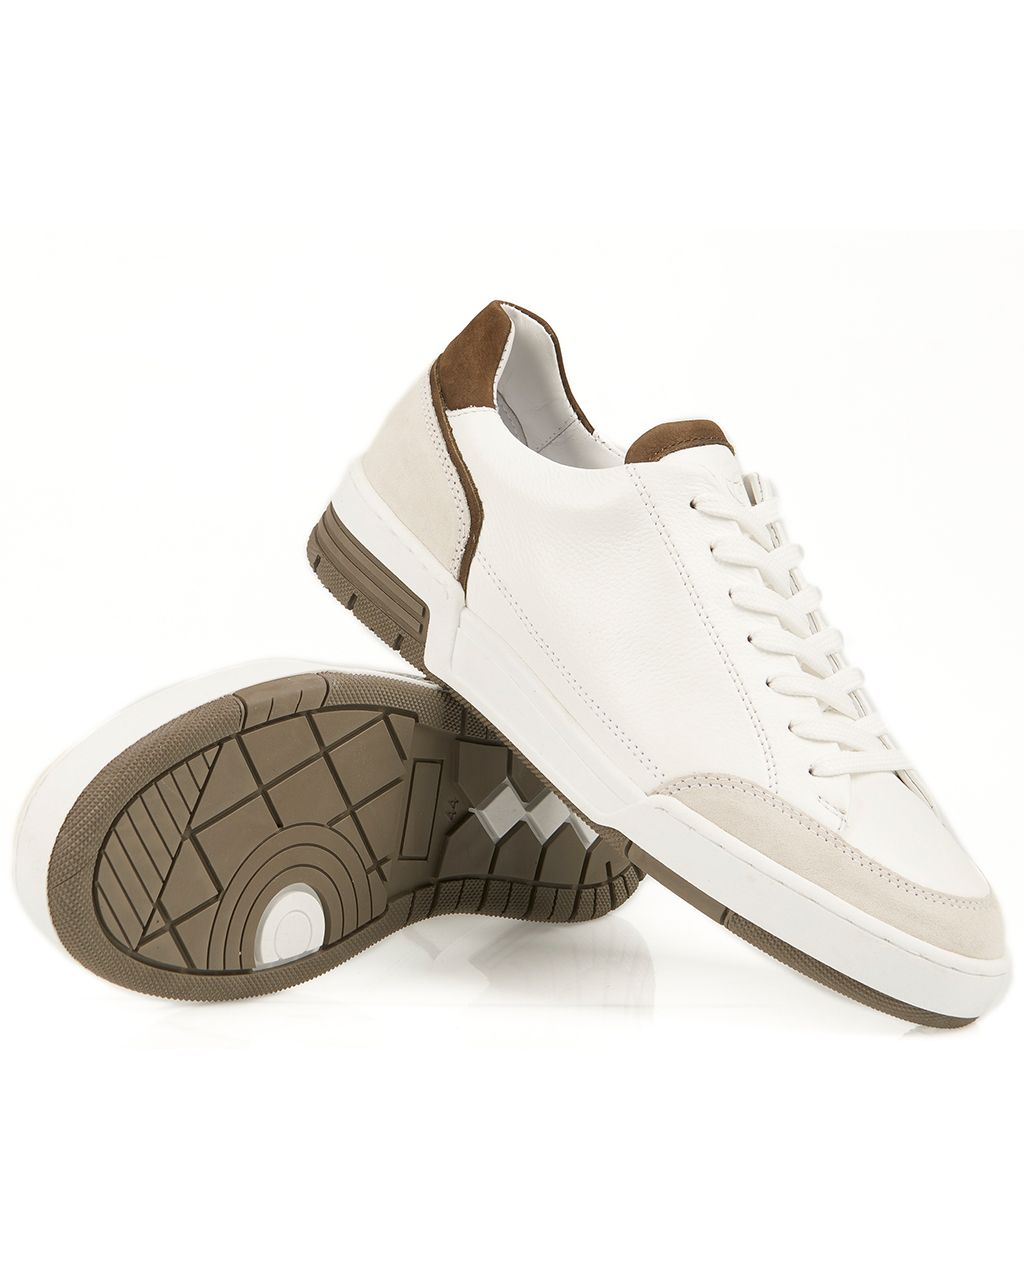 Campbell Classic Sneakers Olijf groen uni 075978-001-40